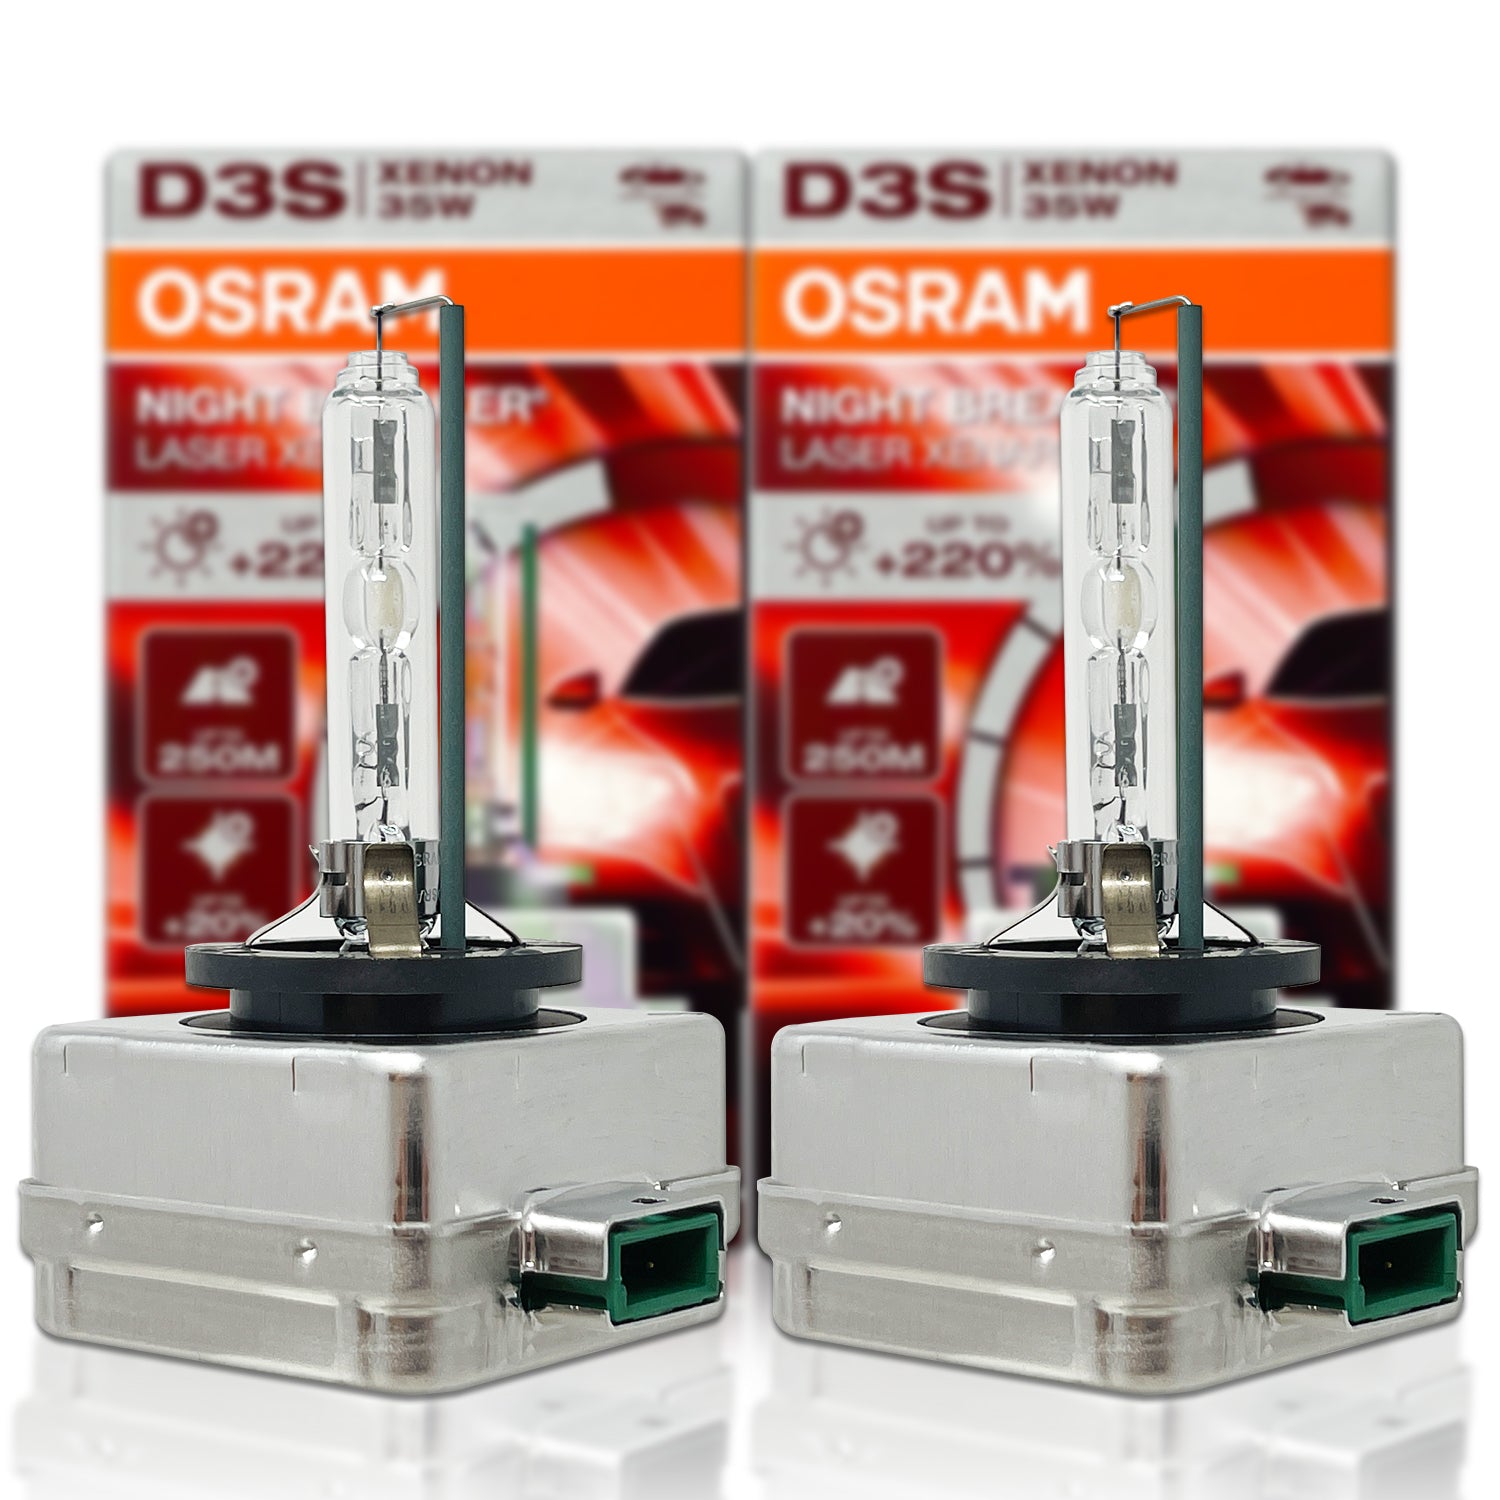 OSRAM XENARC NIGHT BREAKER LASER D3S HID Xenon Lamp 66340XNL 35W